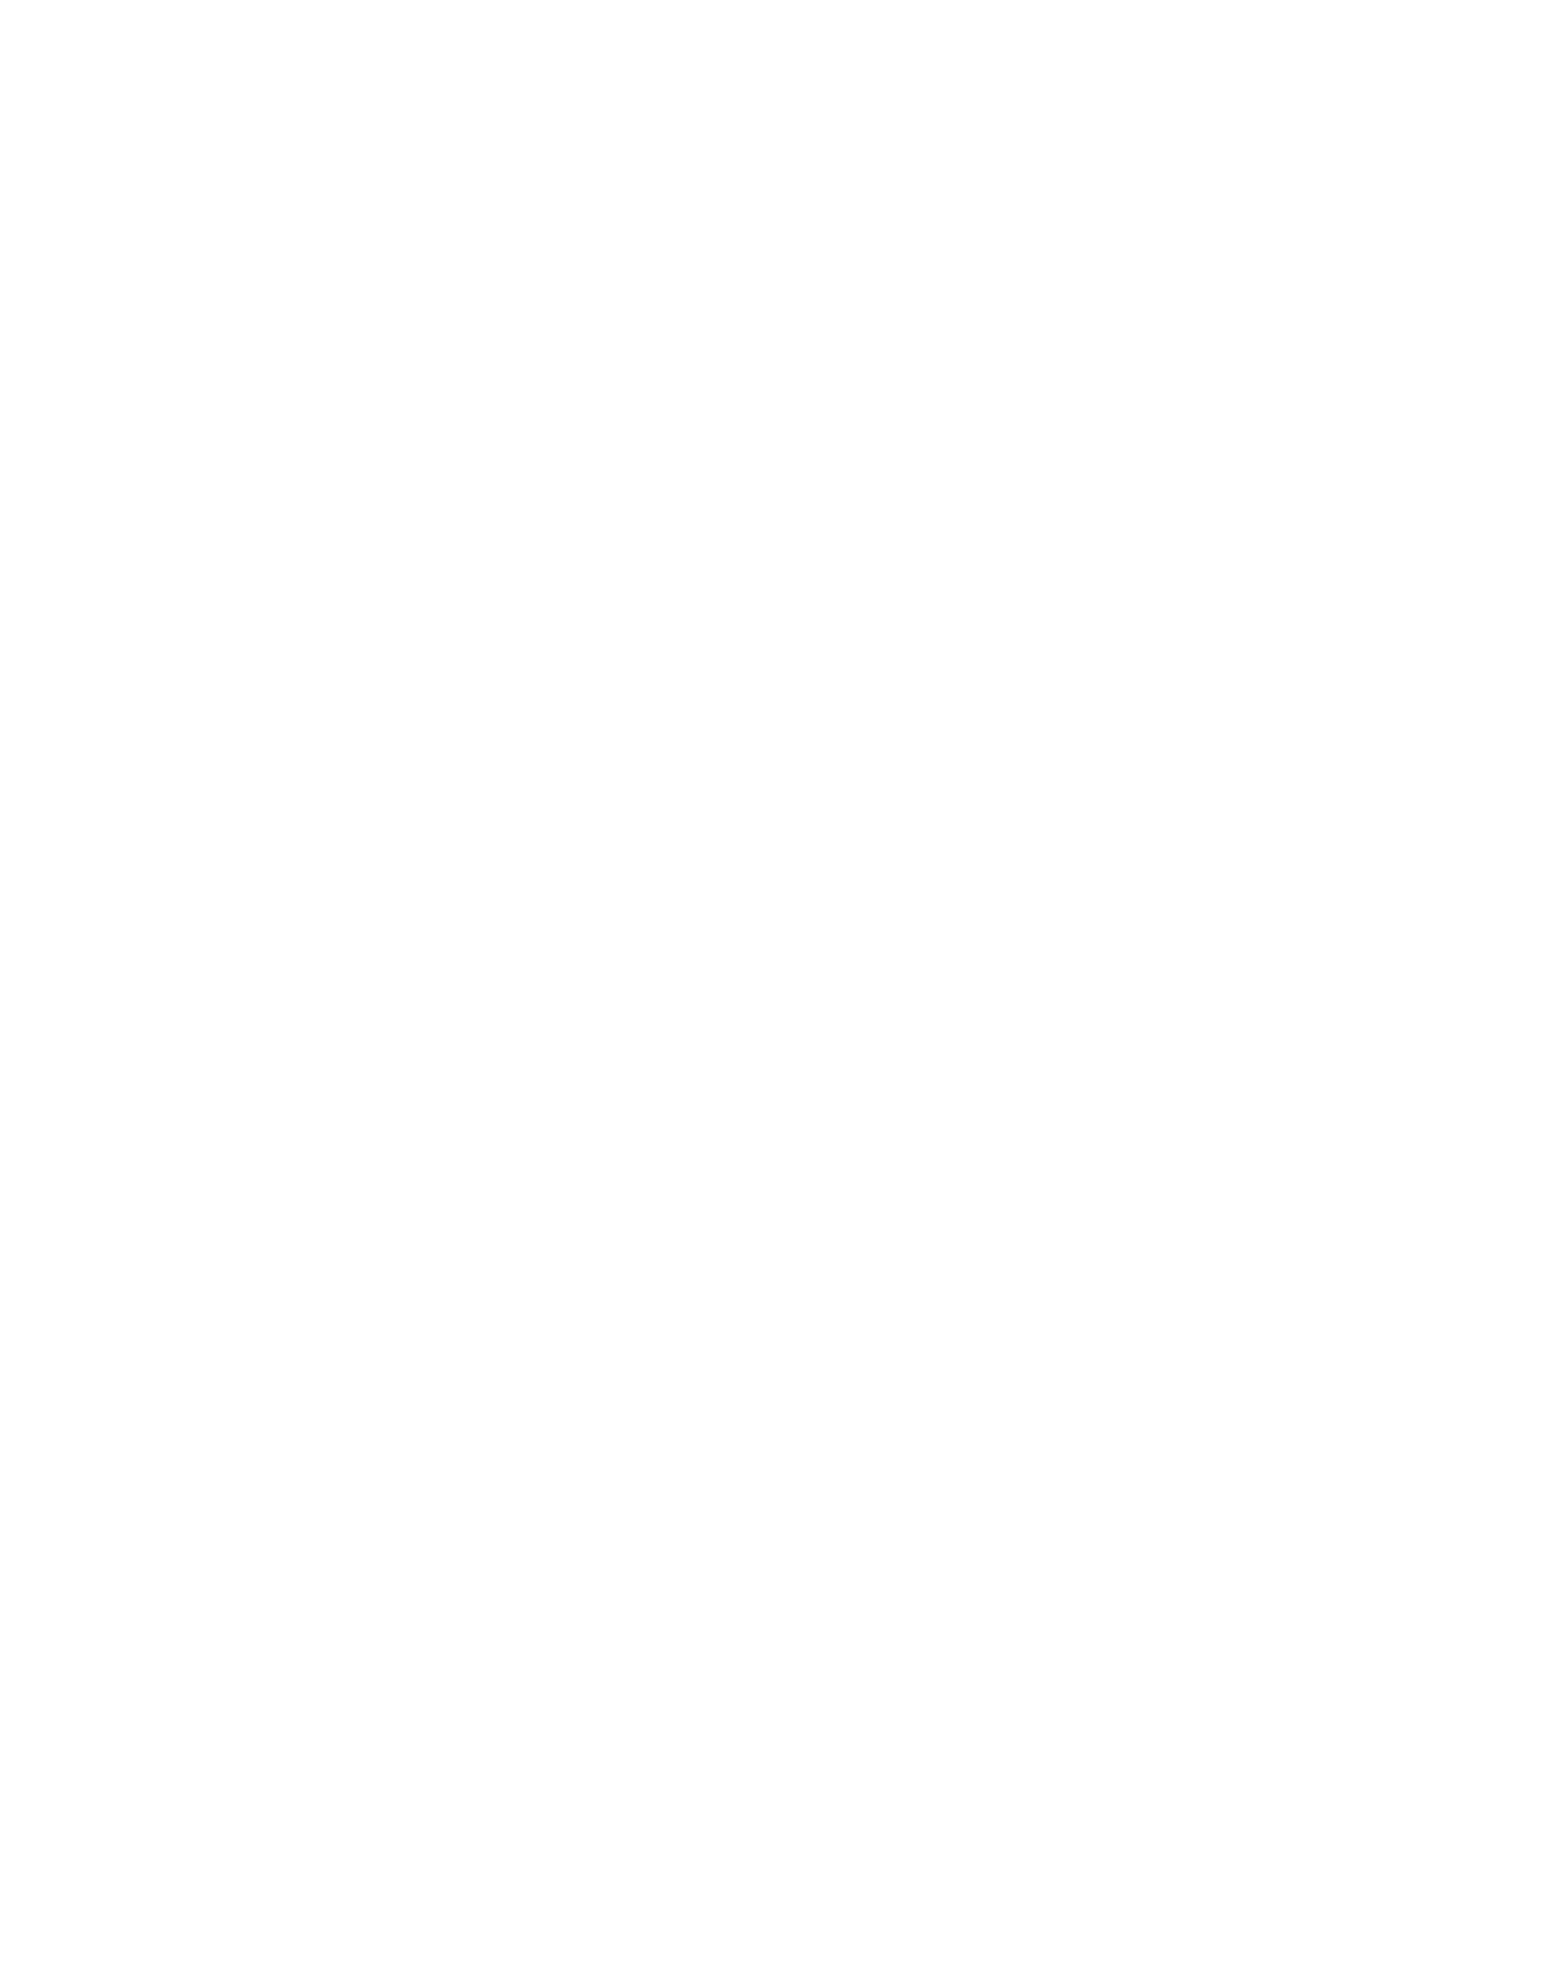 trivago logo for dark backgrounds (transparent PNG)